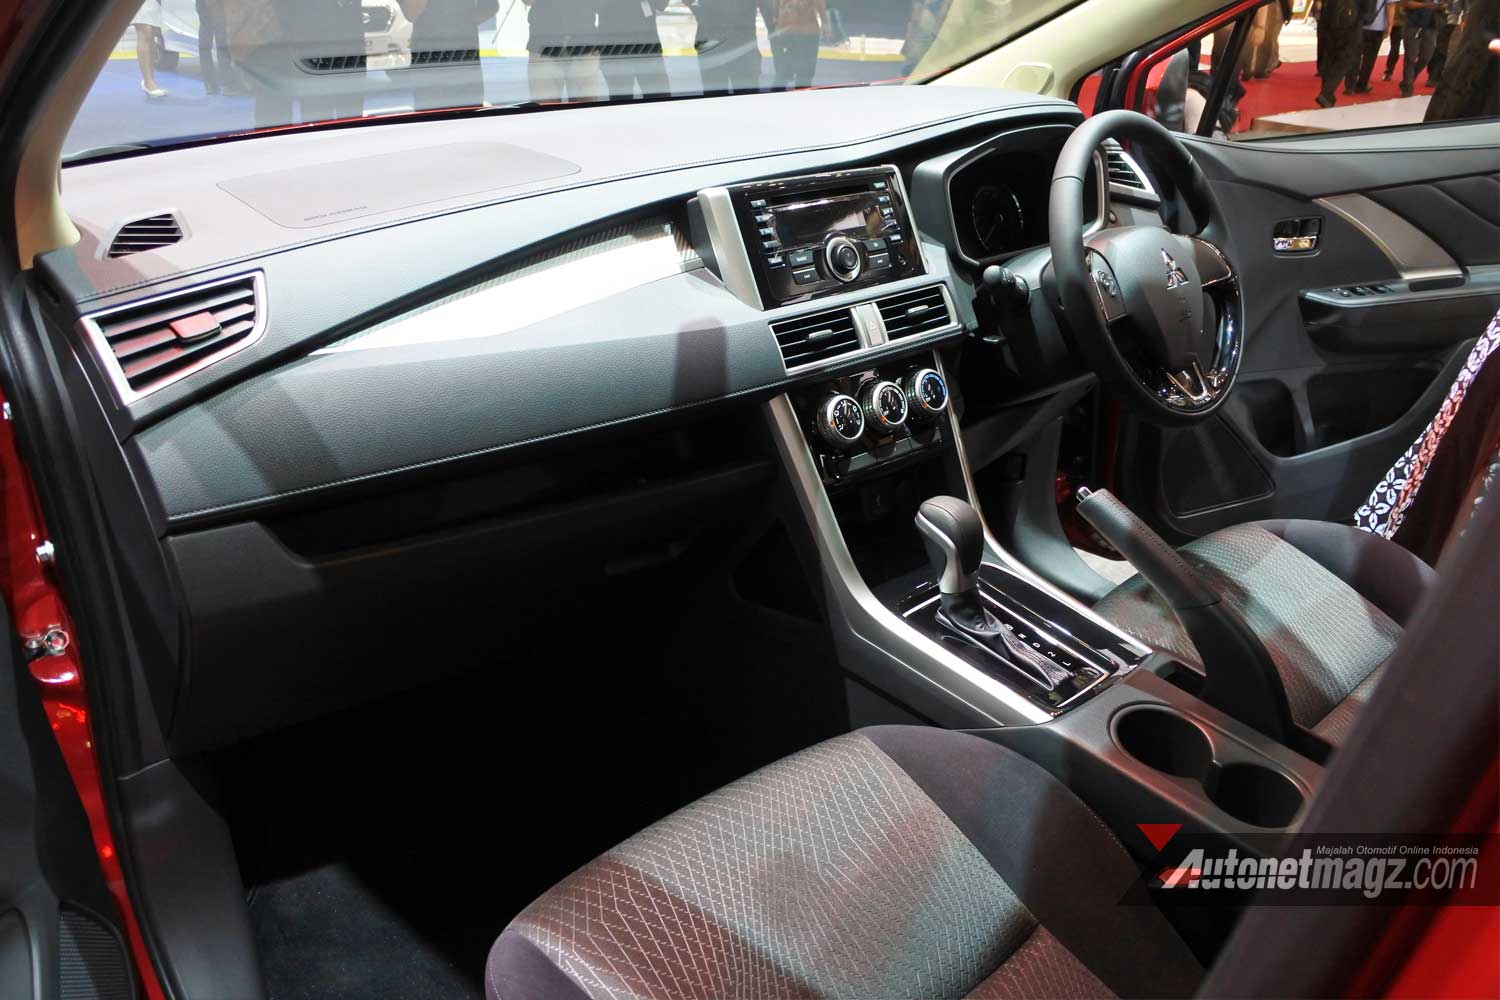  Xpander  interior  dashboard hitam AutonetMagz Review 